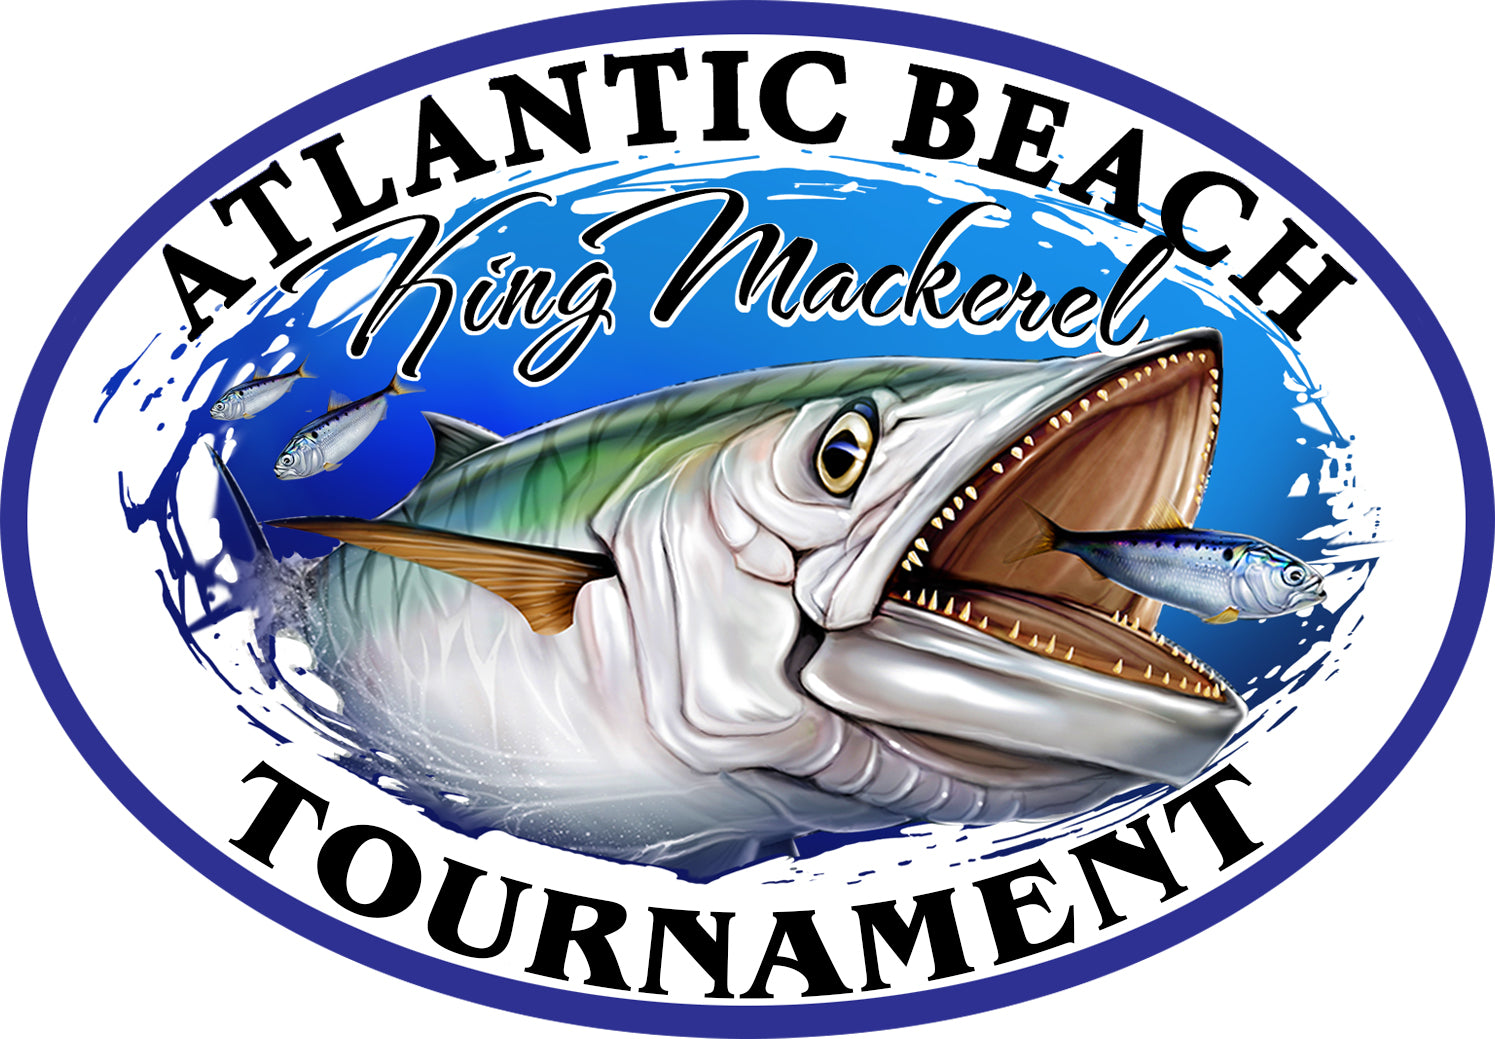 Atlantic Beach King Mackerel Fishing Tournament